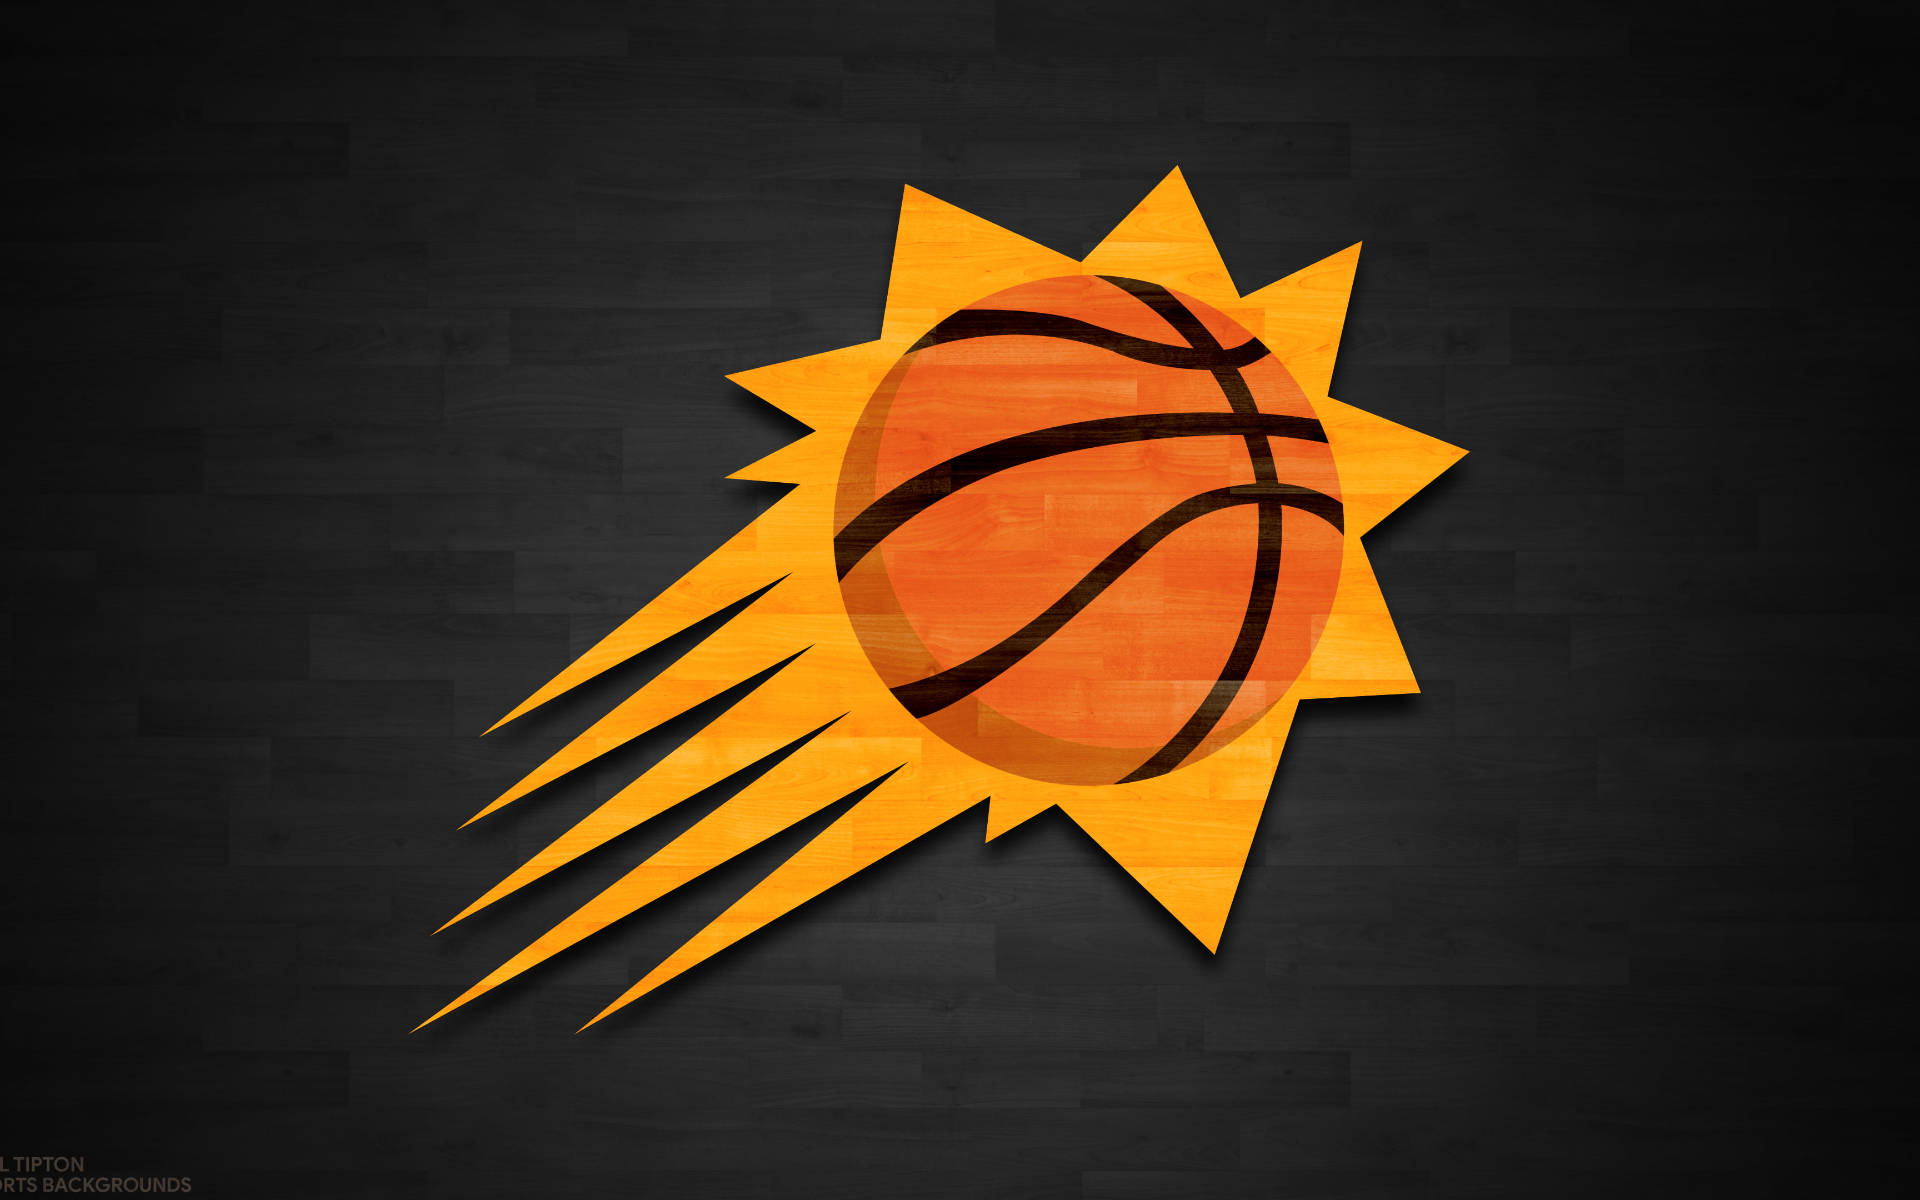 Phoenix Suns Team In Action Background